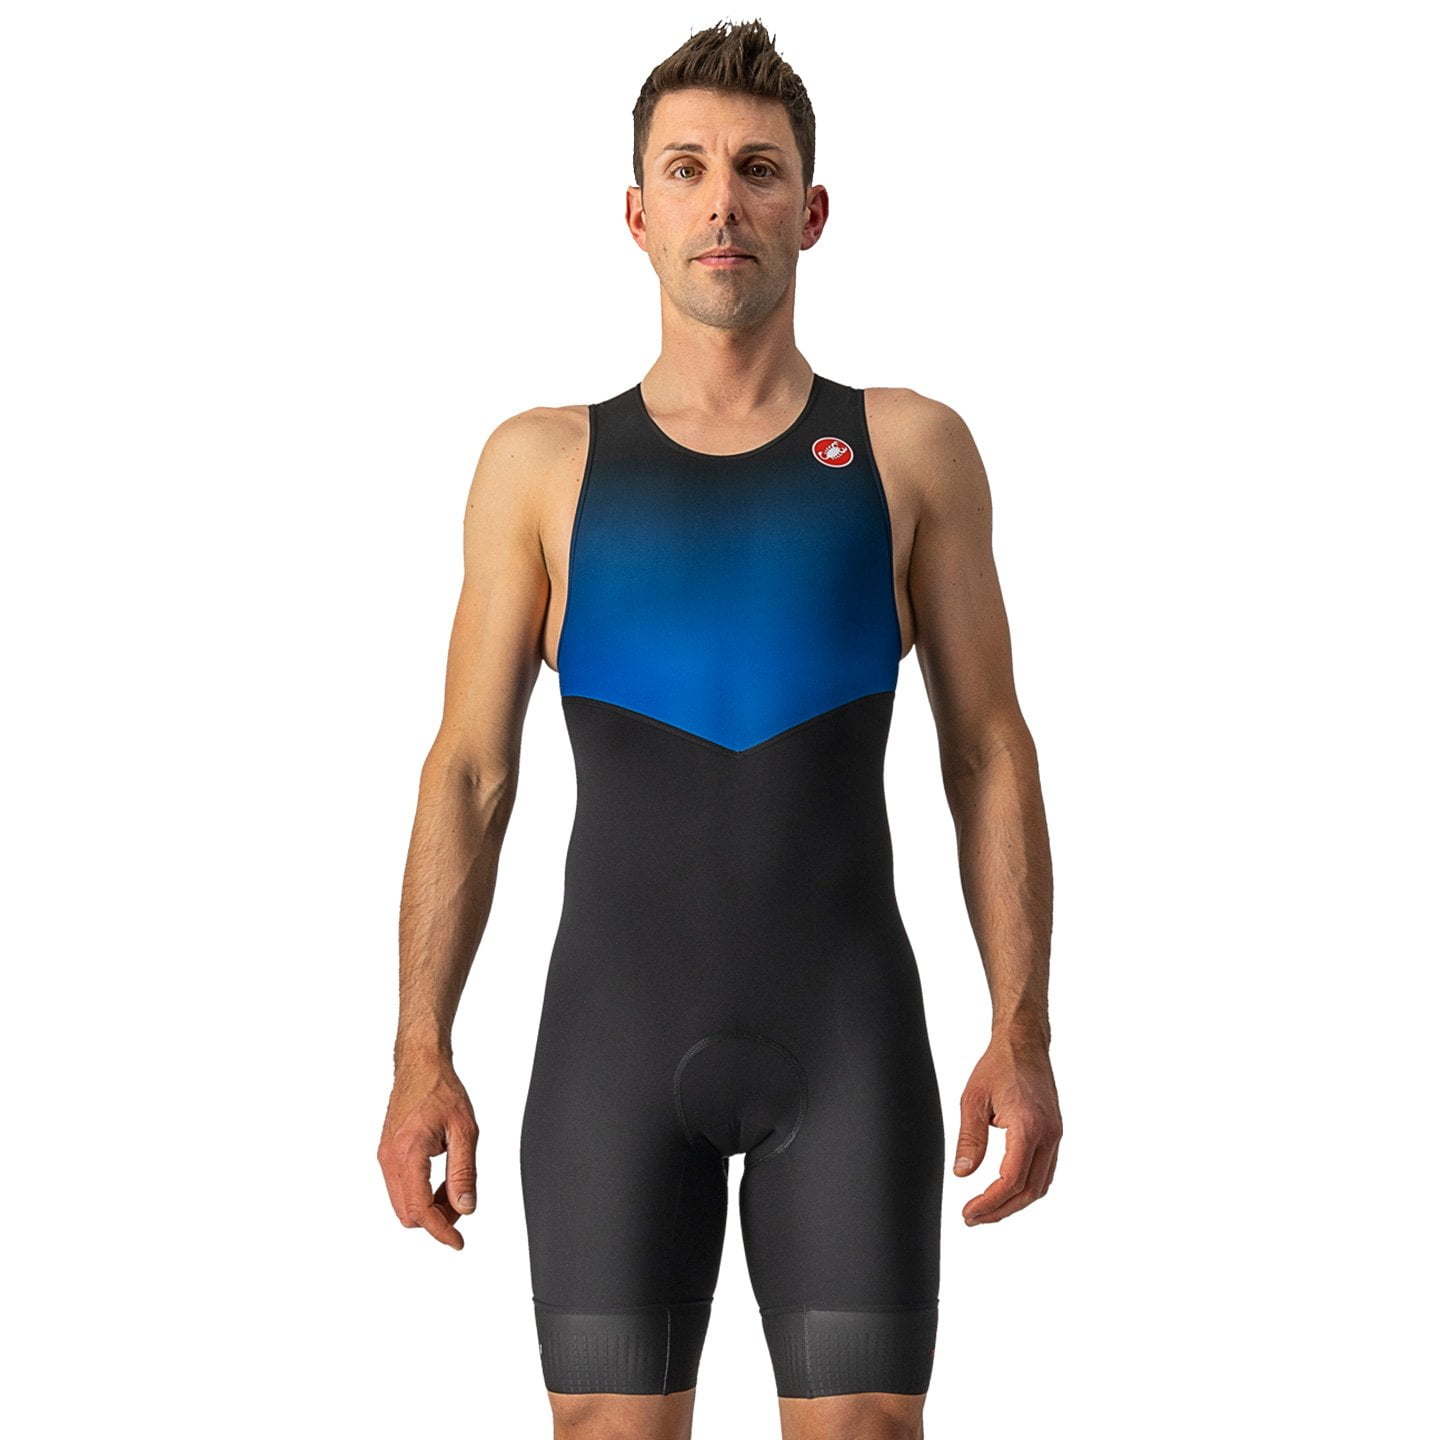 CASTELLI SD Team Sleeveless Tri Suit Tri Suit, for men, size L, Triathlon suit, Triathlon wear